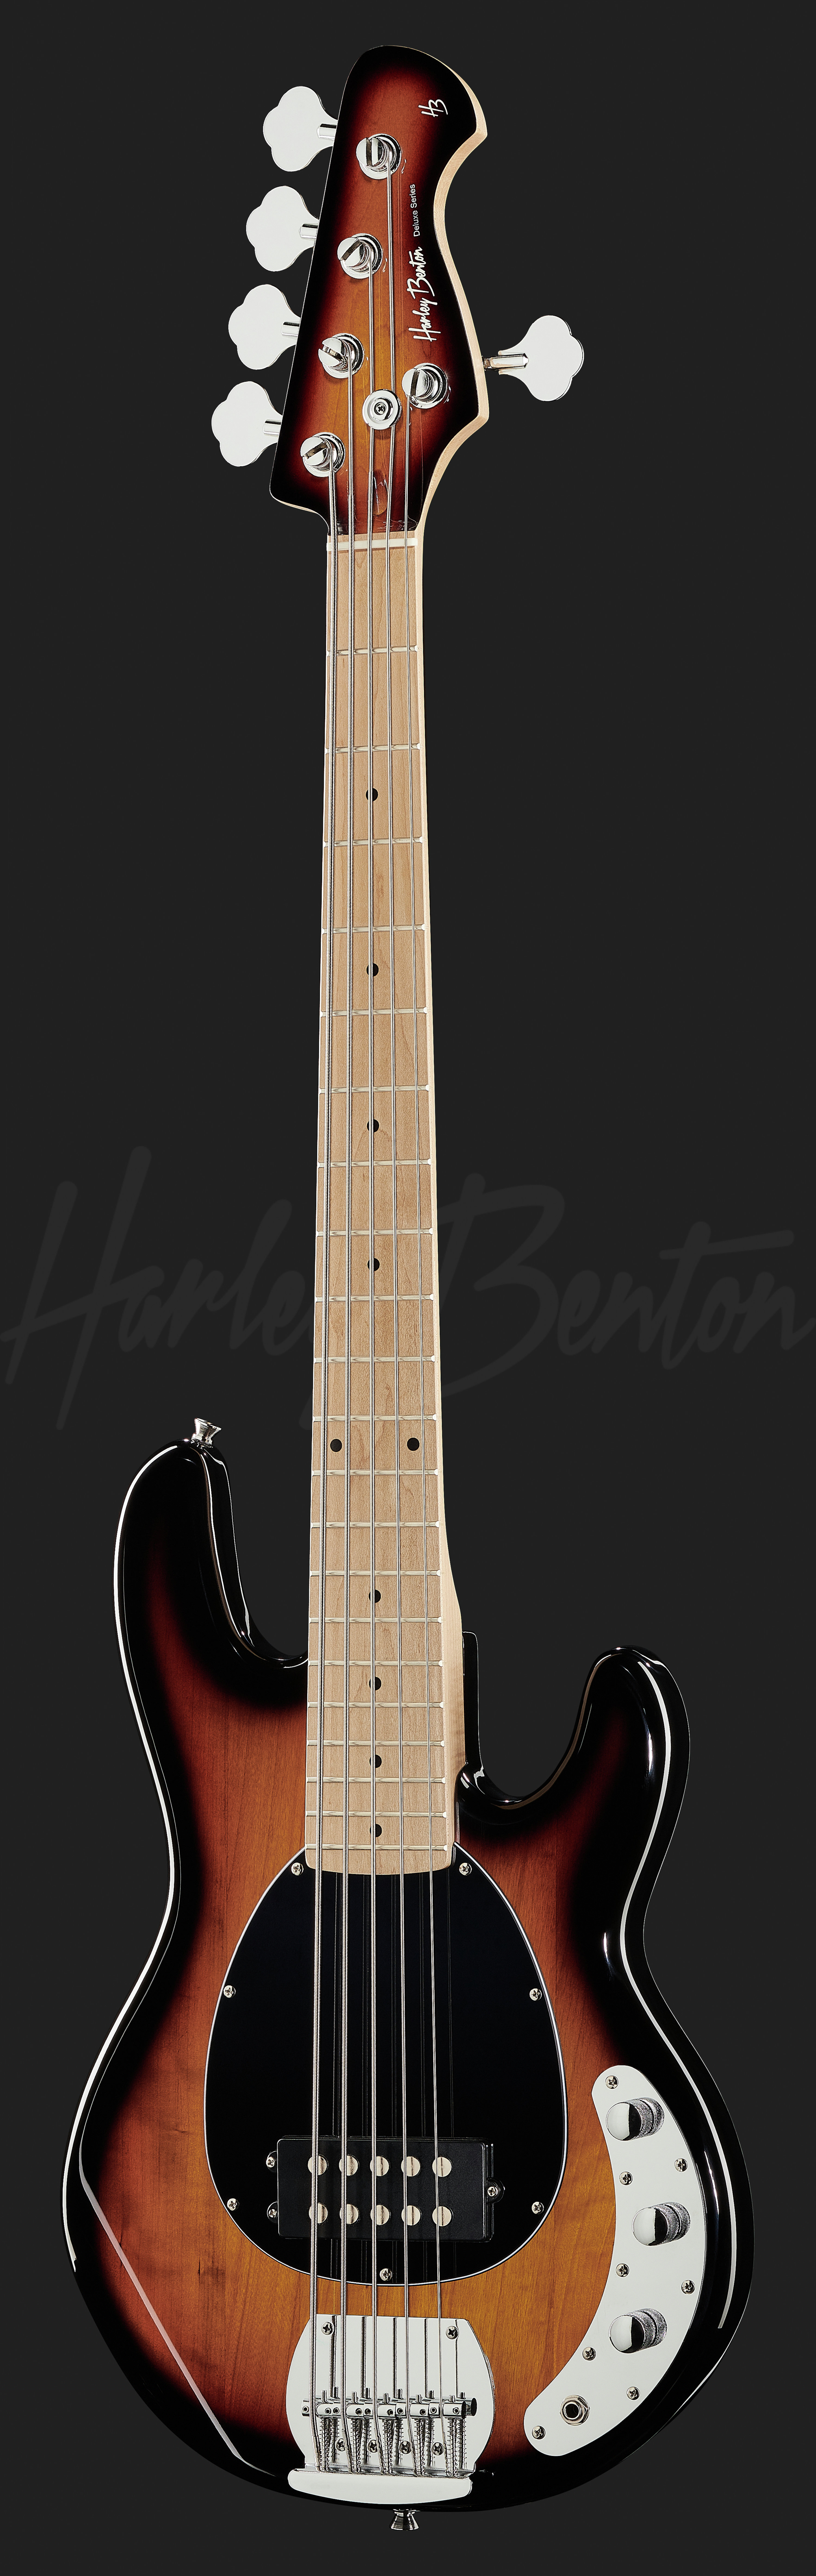 Harley Benton MB-5 SB Deluxe